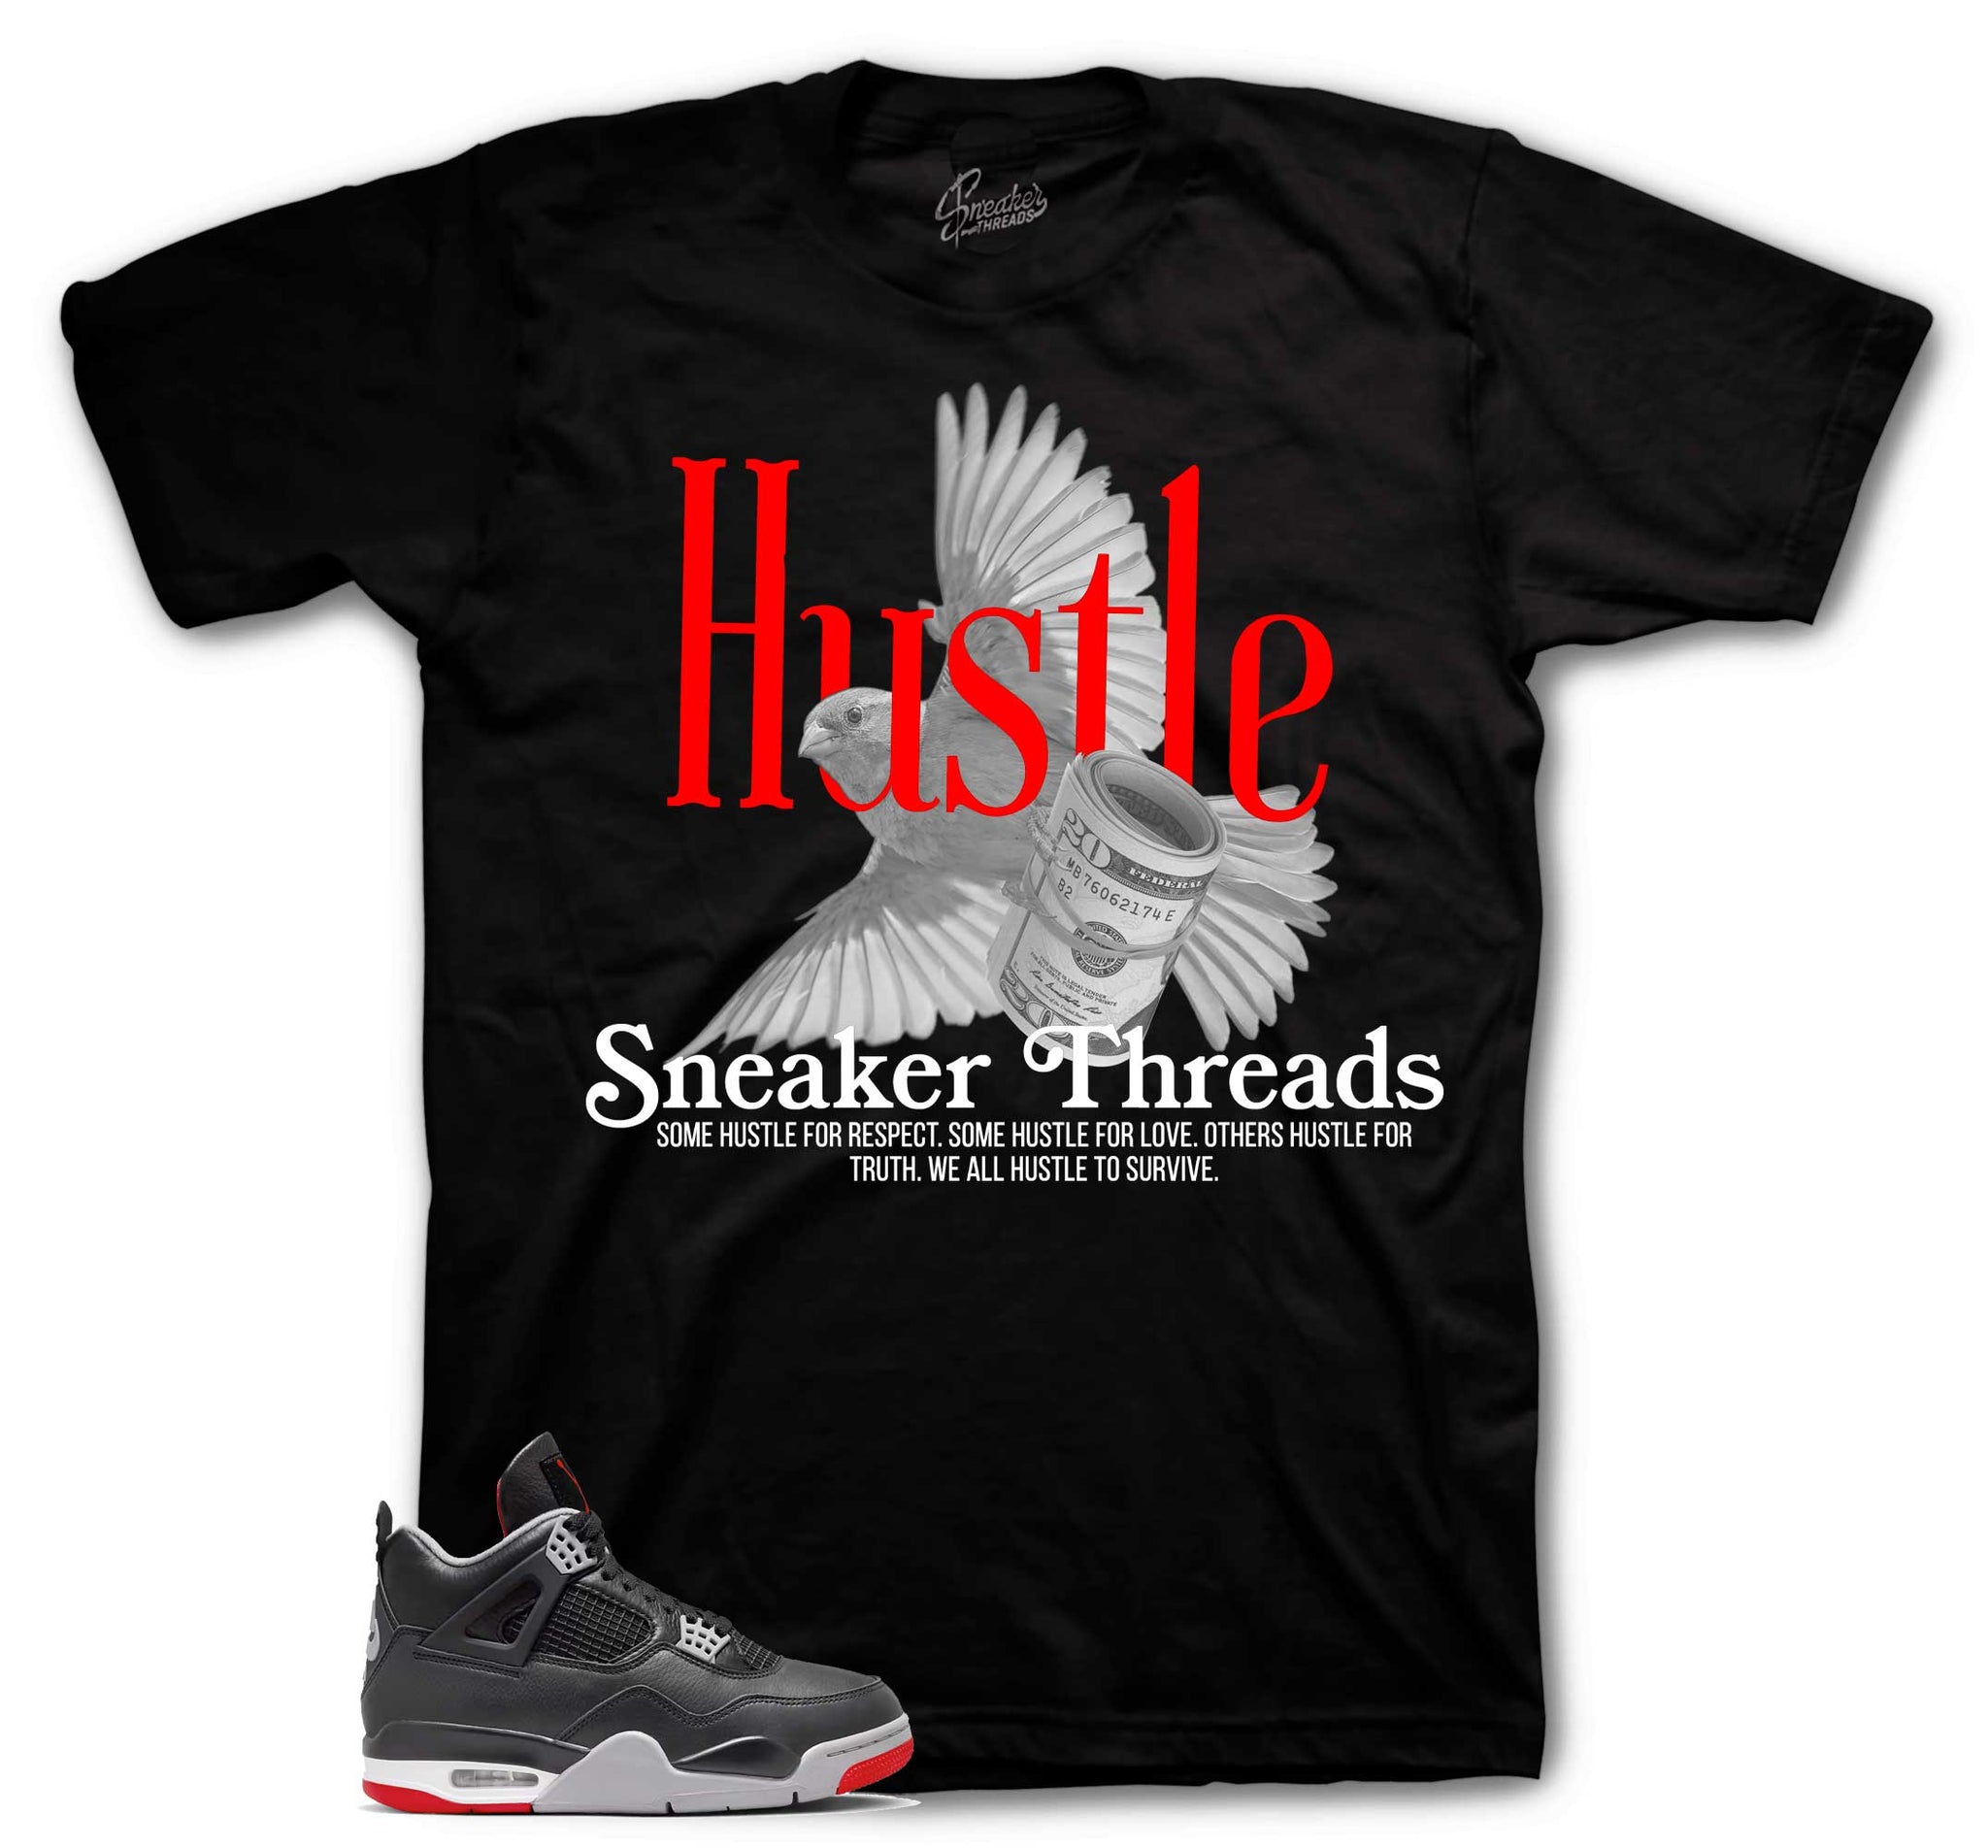 Retro 4 Bred Shirt - Fly Hustle - Black